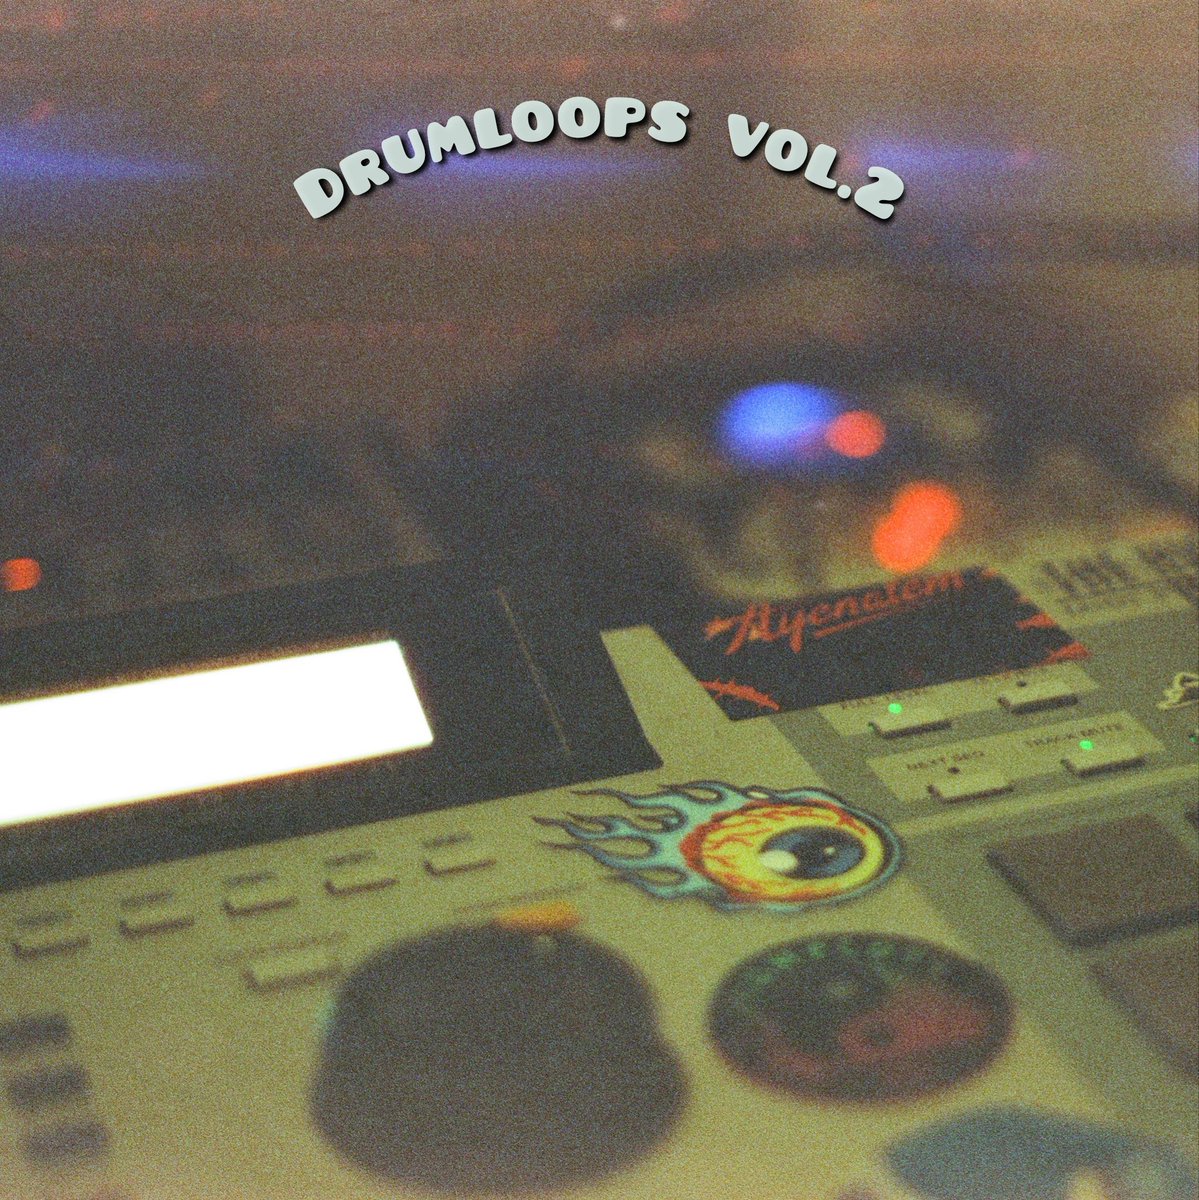 Drumloops vol.2 out now 🥁🥁🥁
mayaewk.gumroad.com/l/drmlps2